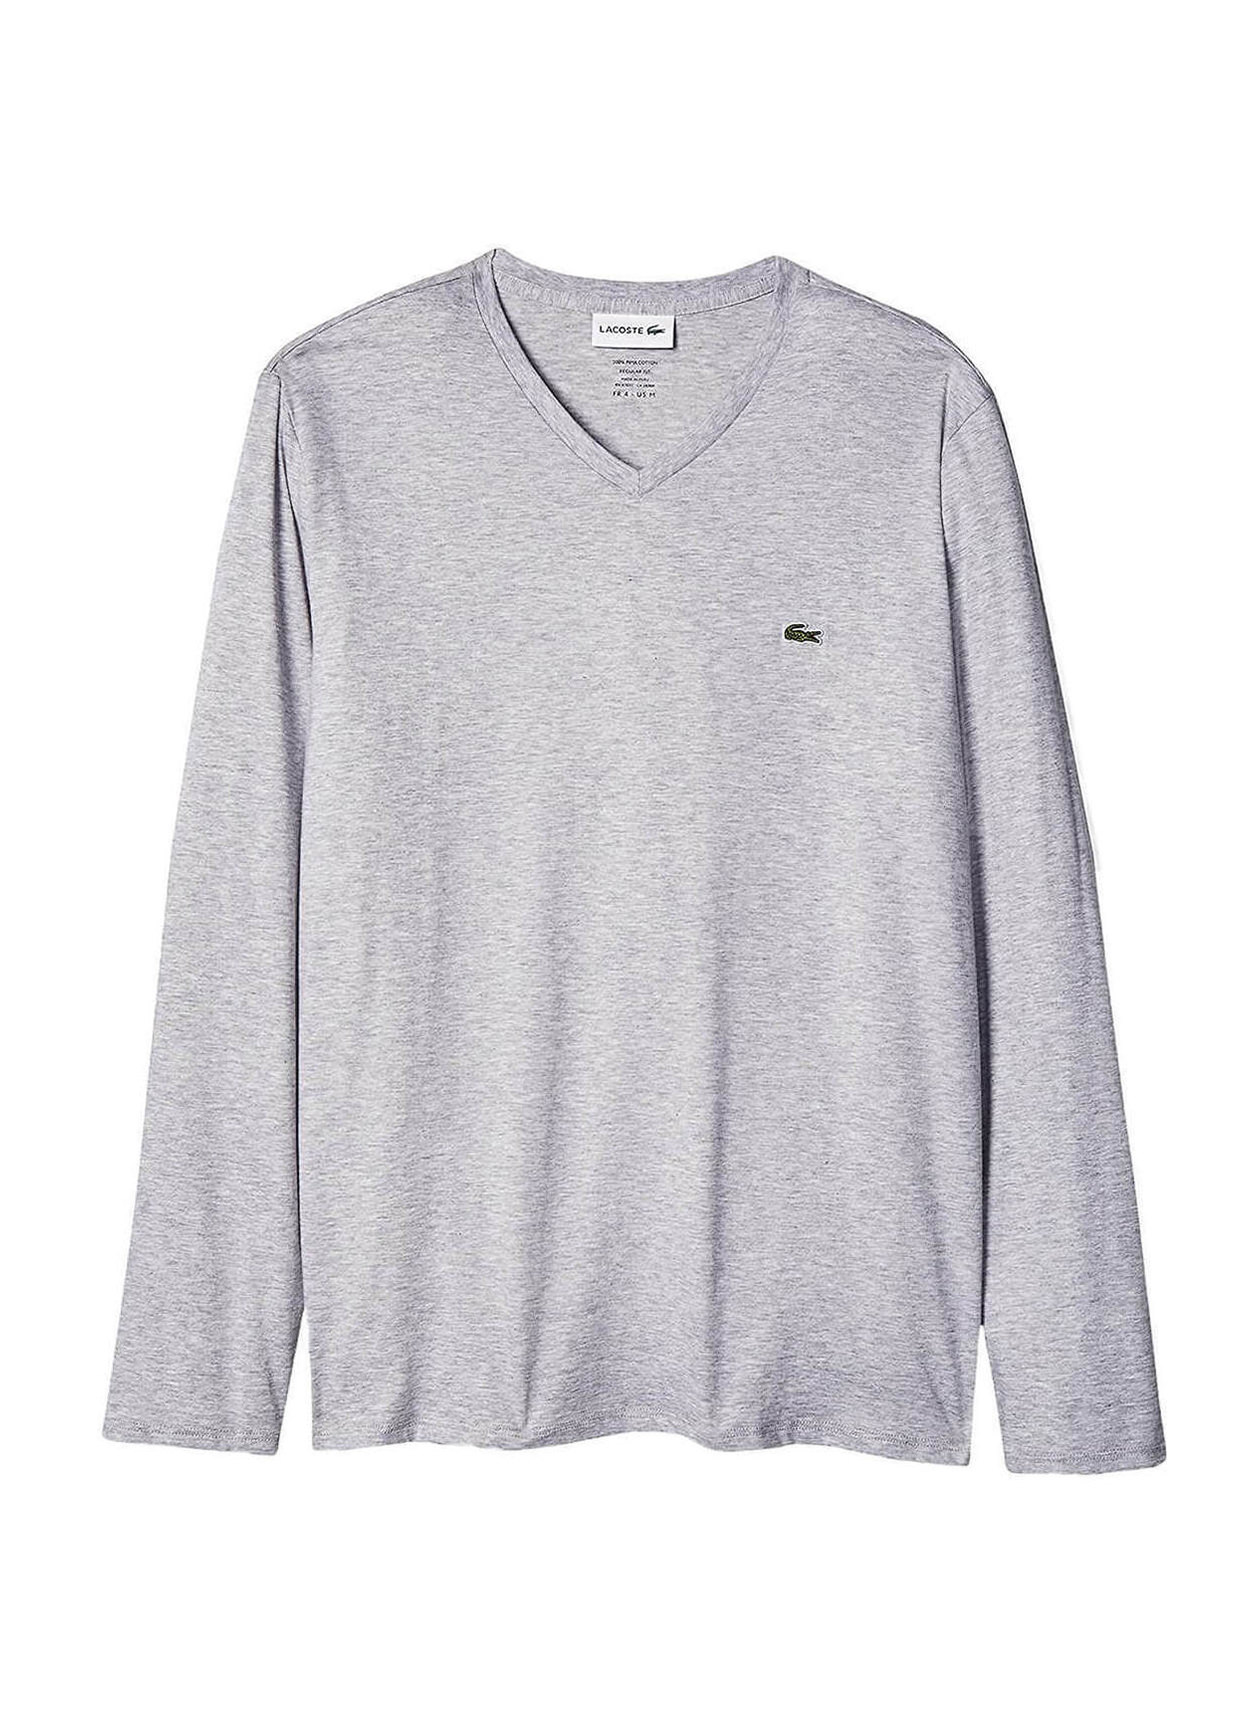 Lacoste Men's Silver Chine Pima V-Neck Long-Sleeve T-Shirt